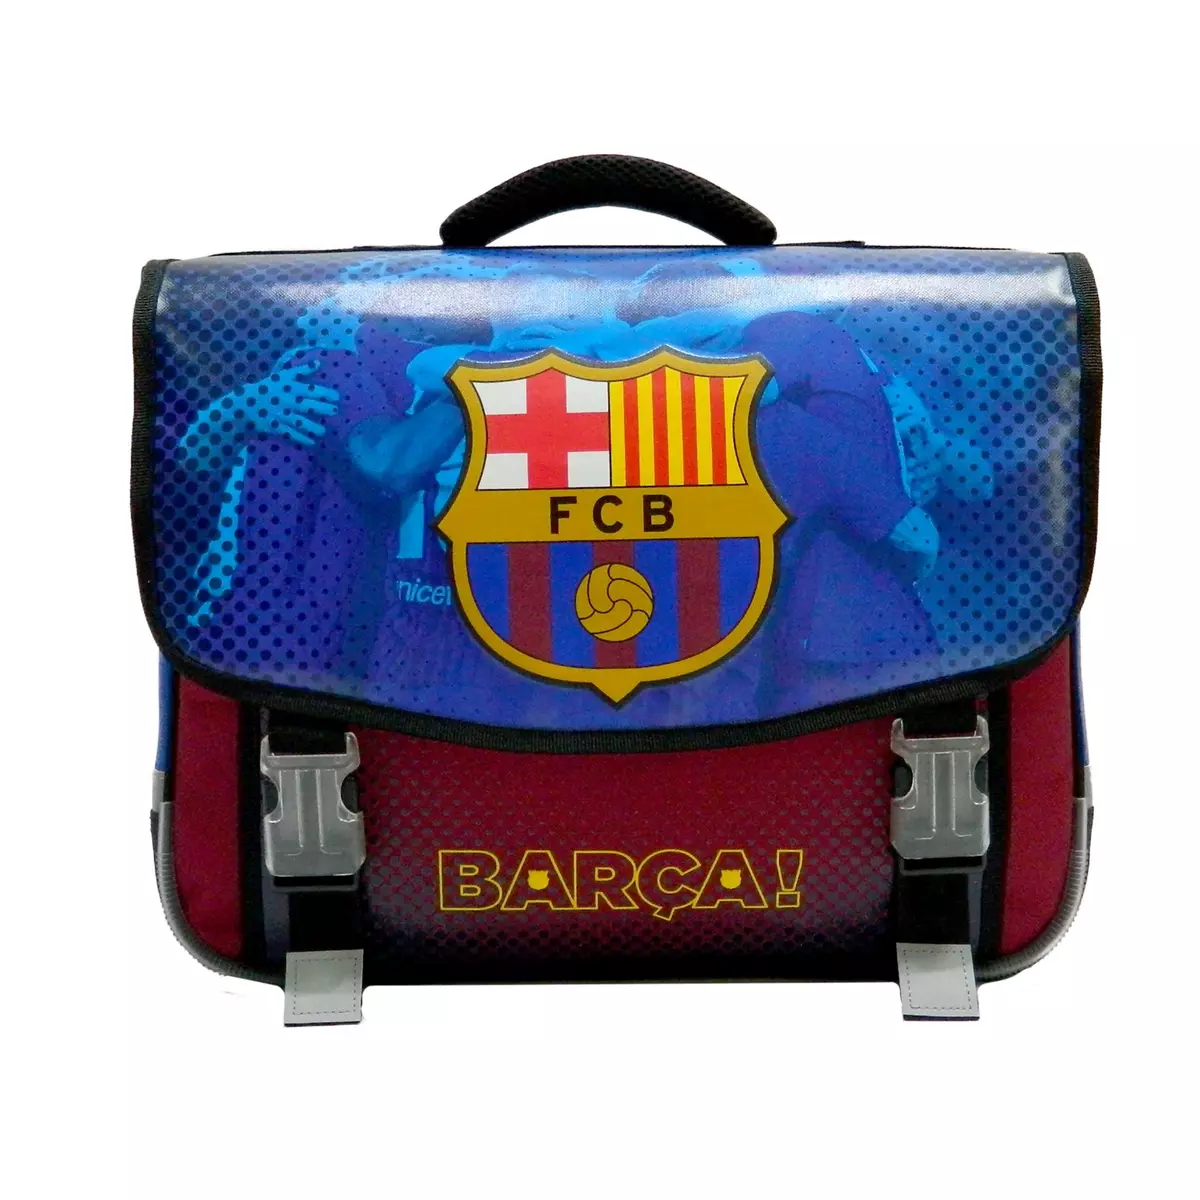 FC Barcelona Cartable 41 cm bleu FC BARCELONE